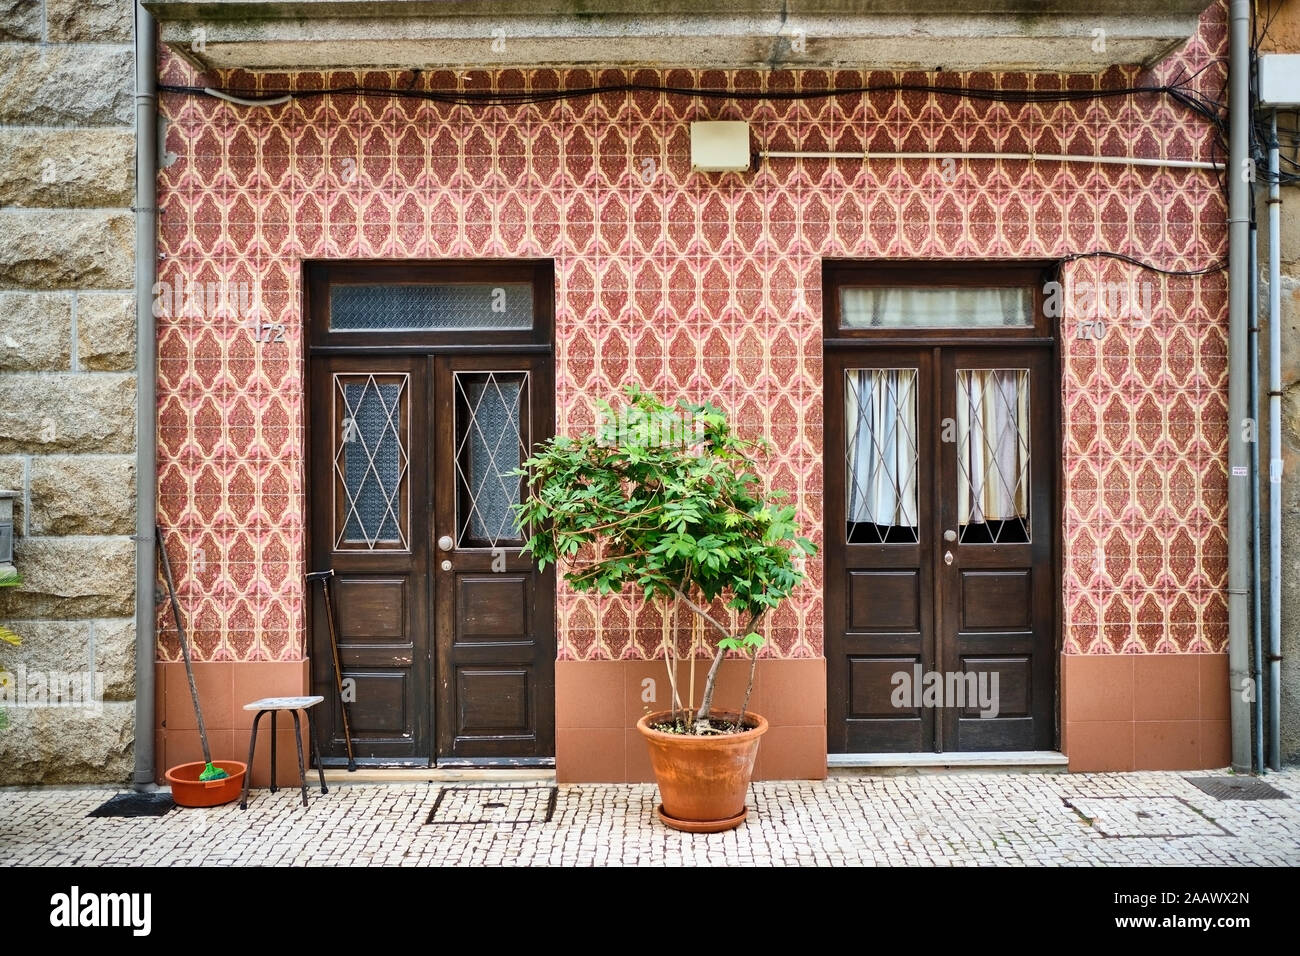 Portugal, Porto, Afurada, Front view of unique ornate house facade Stock Photo